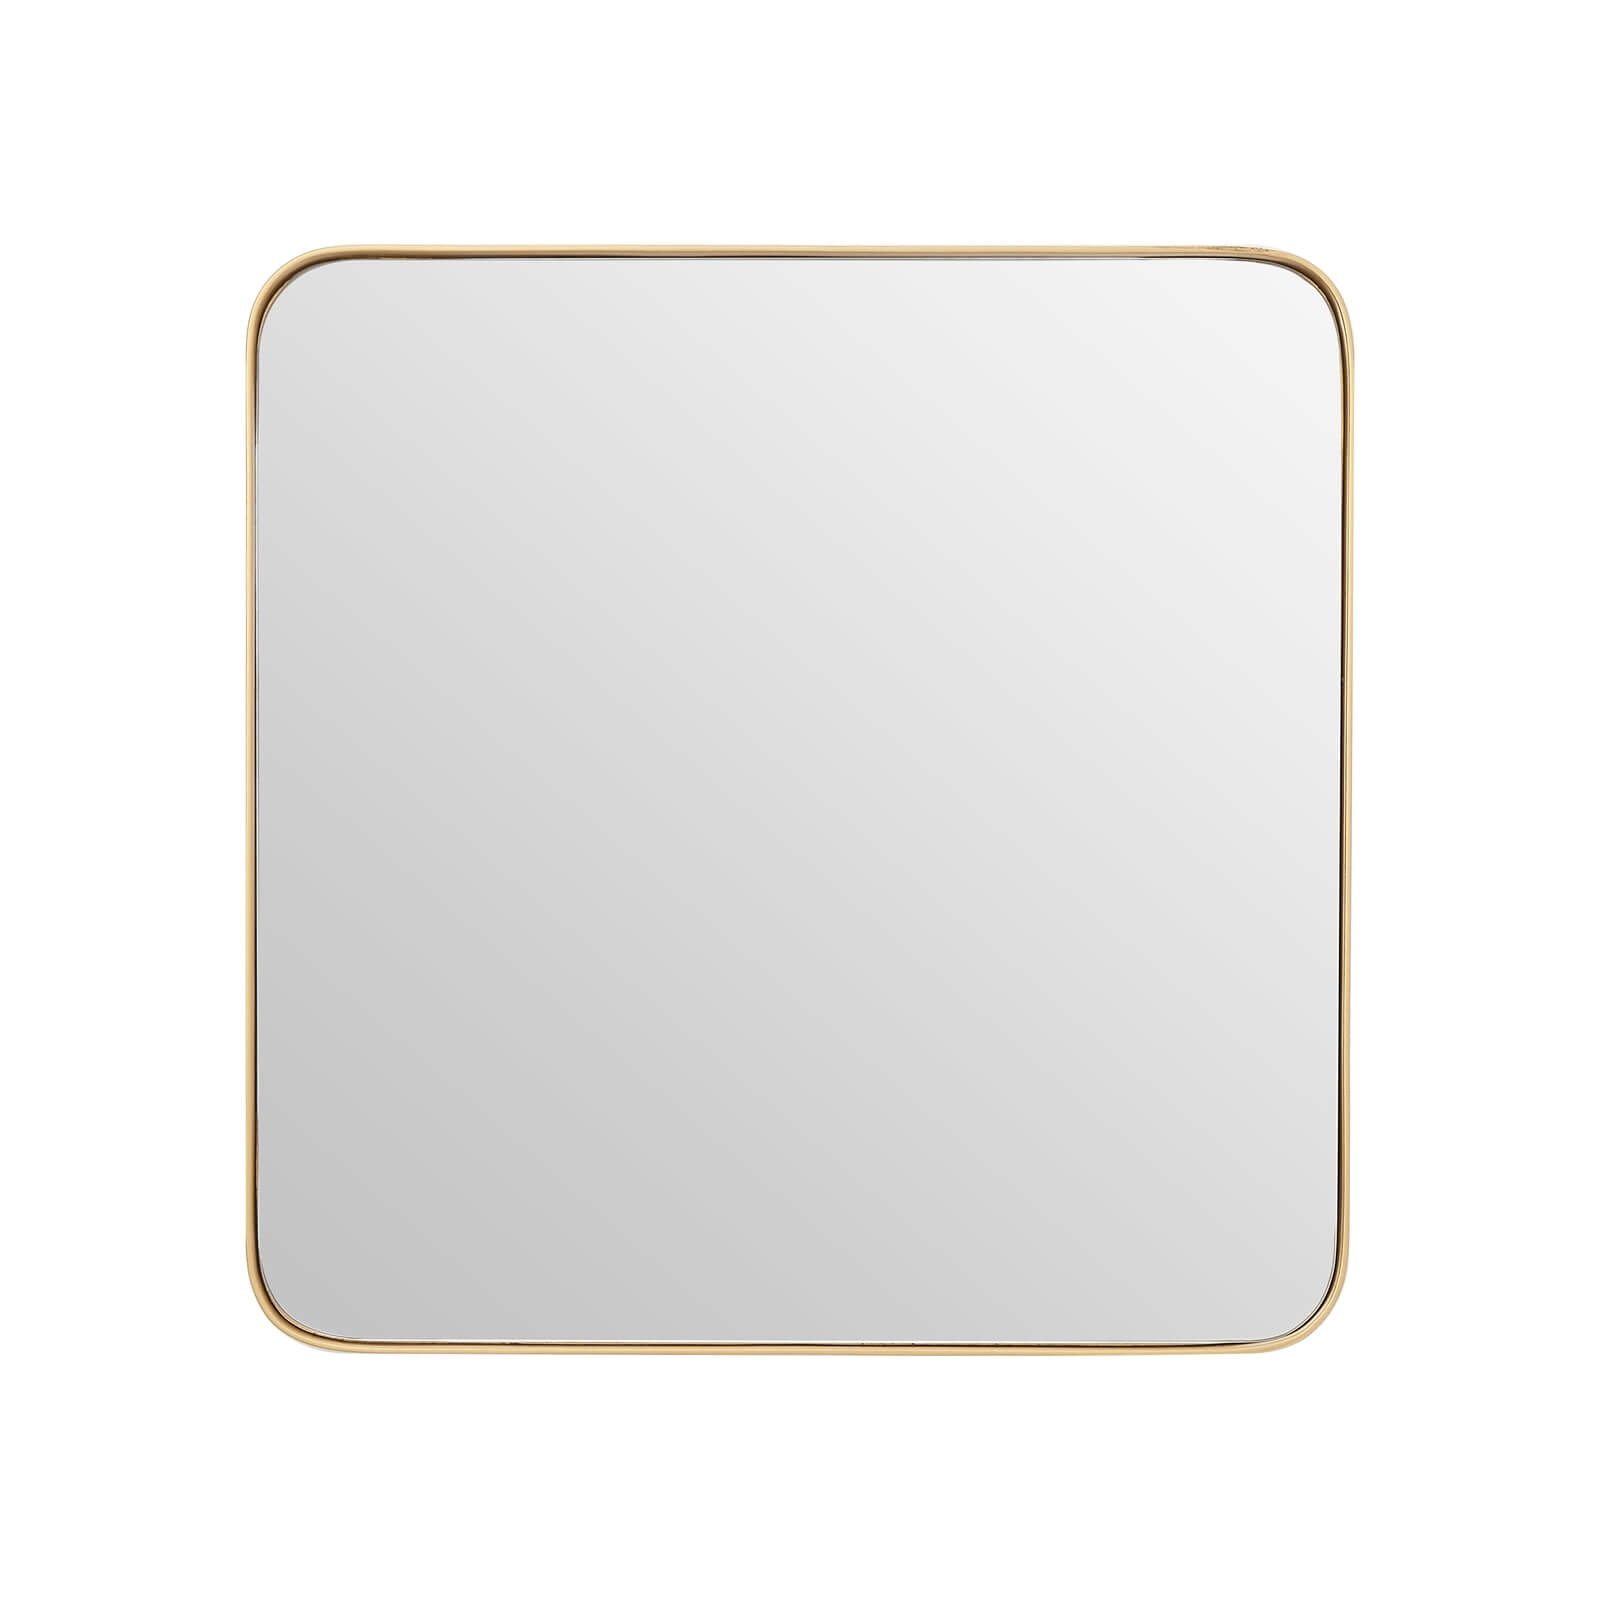 Medium Gold Square Wall Mirror